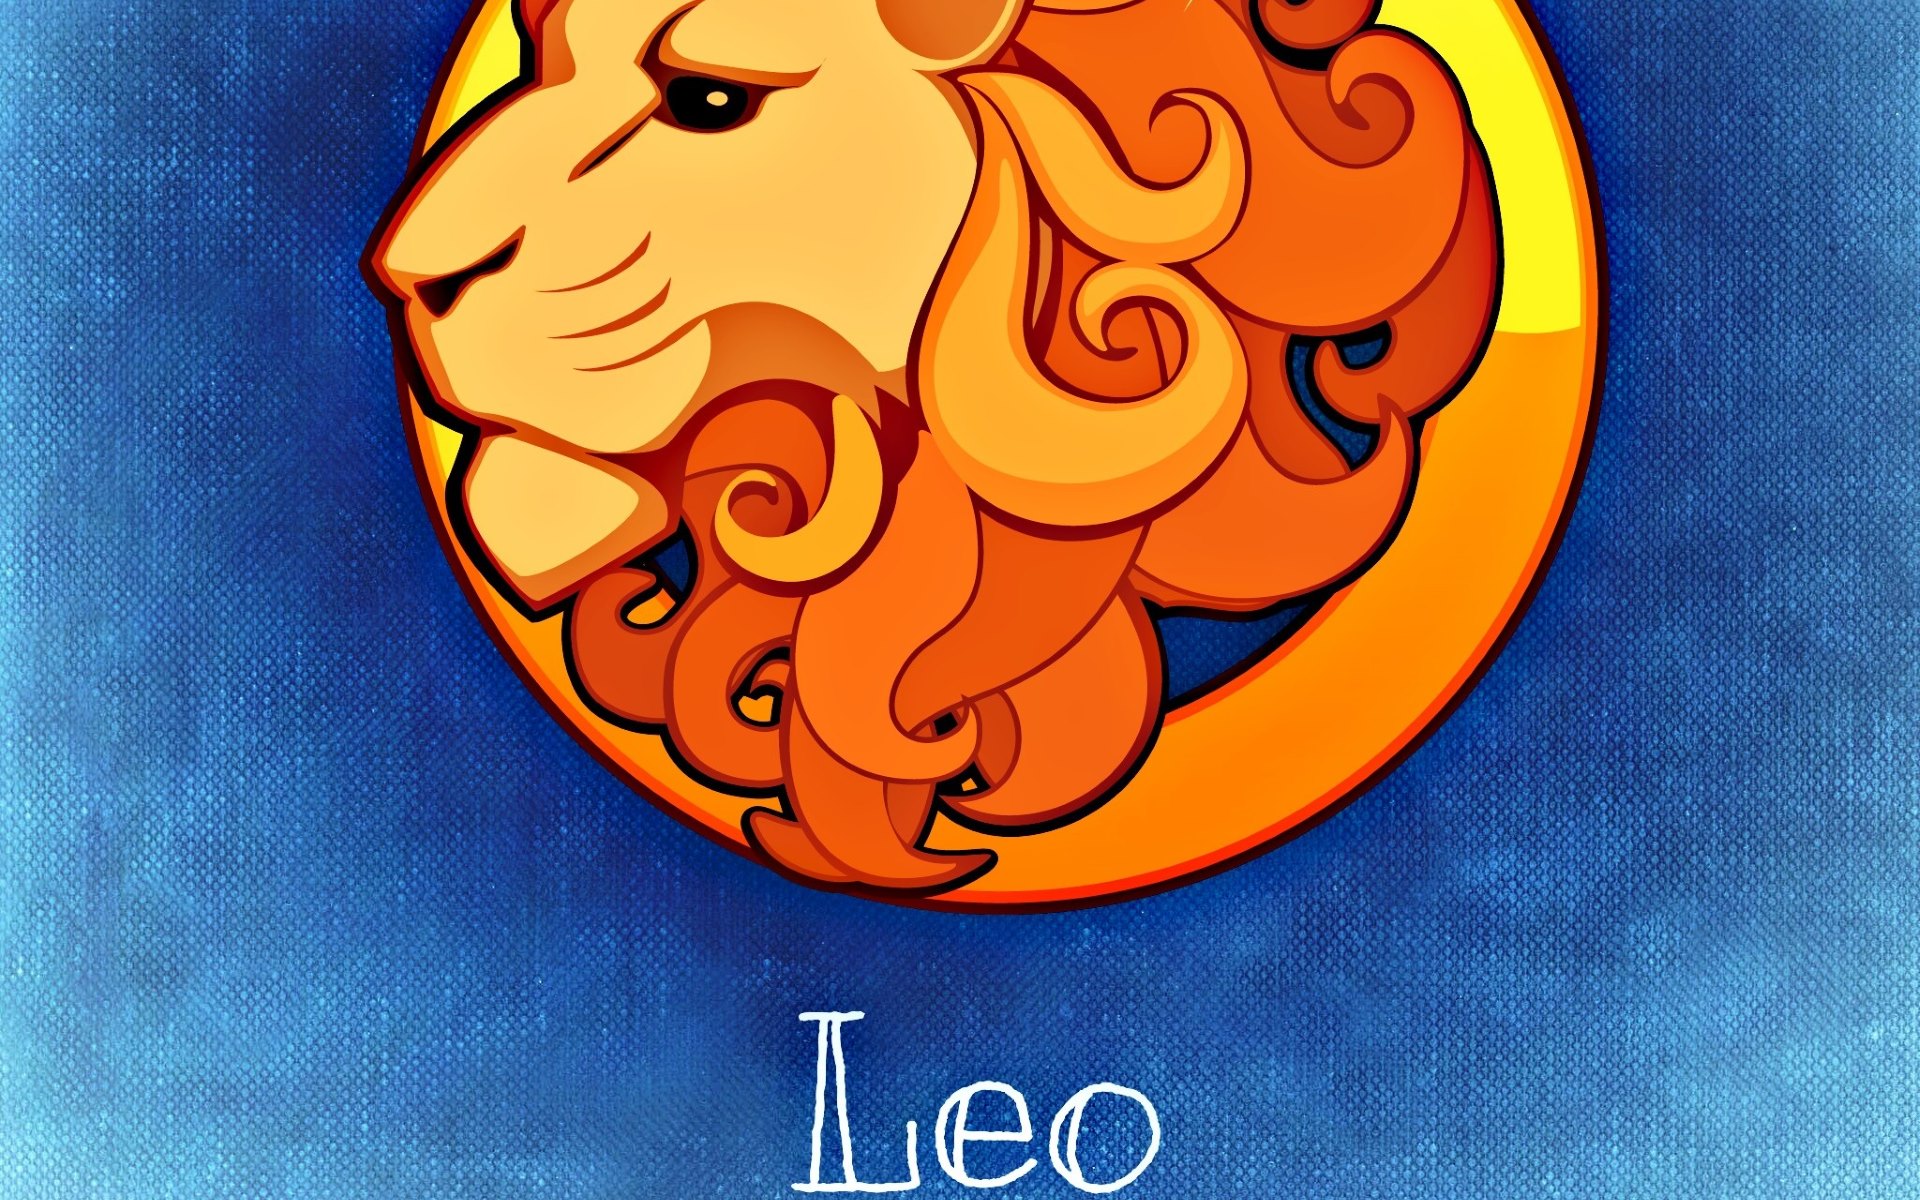 Horoscope - Leo by Alexas_Fotos